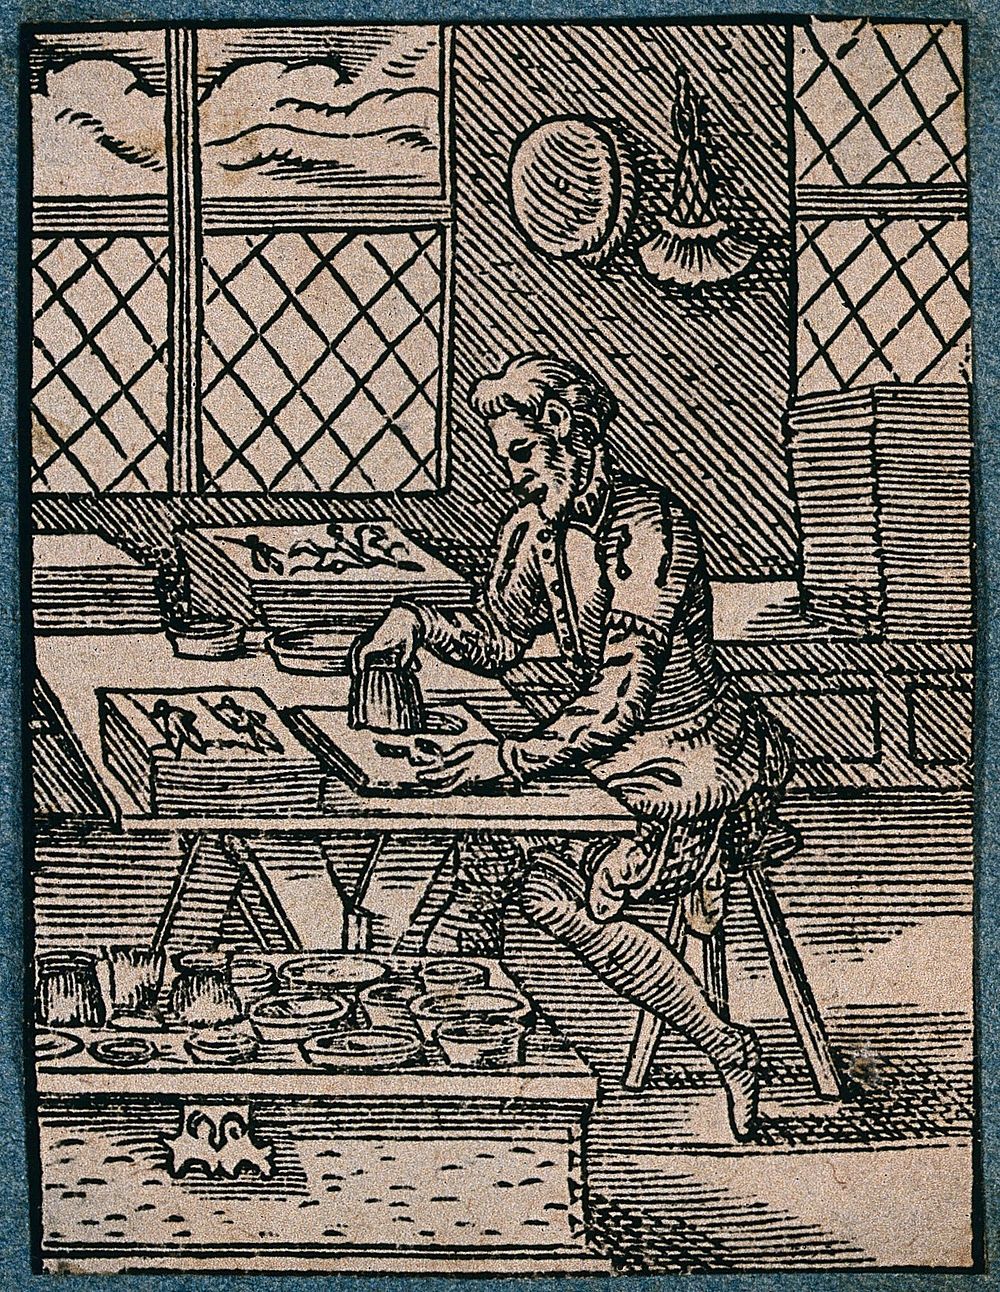 A craftsman illuminating a document. Woodcut by J. Amman.